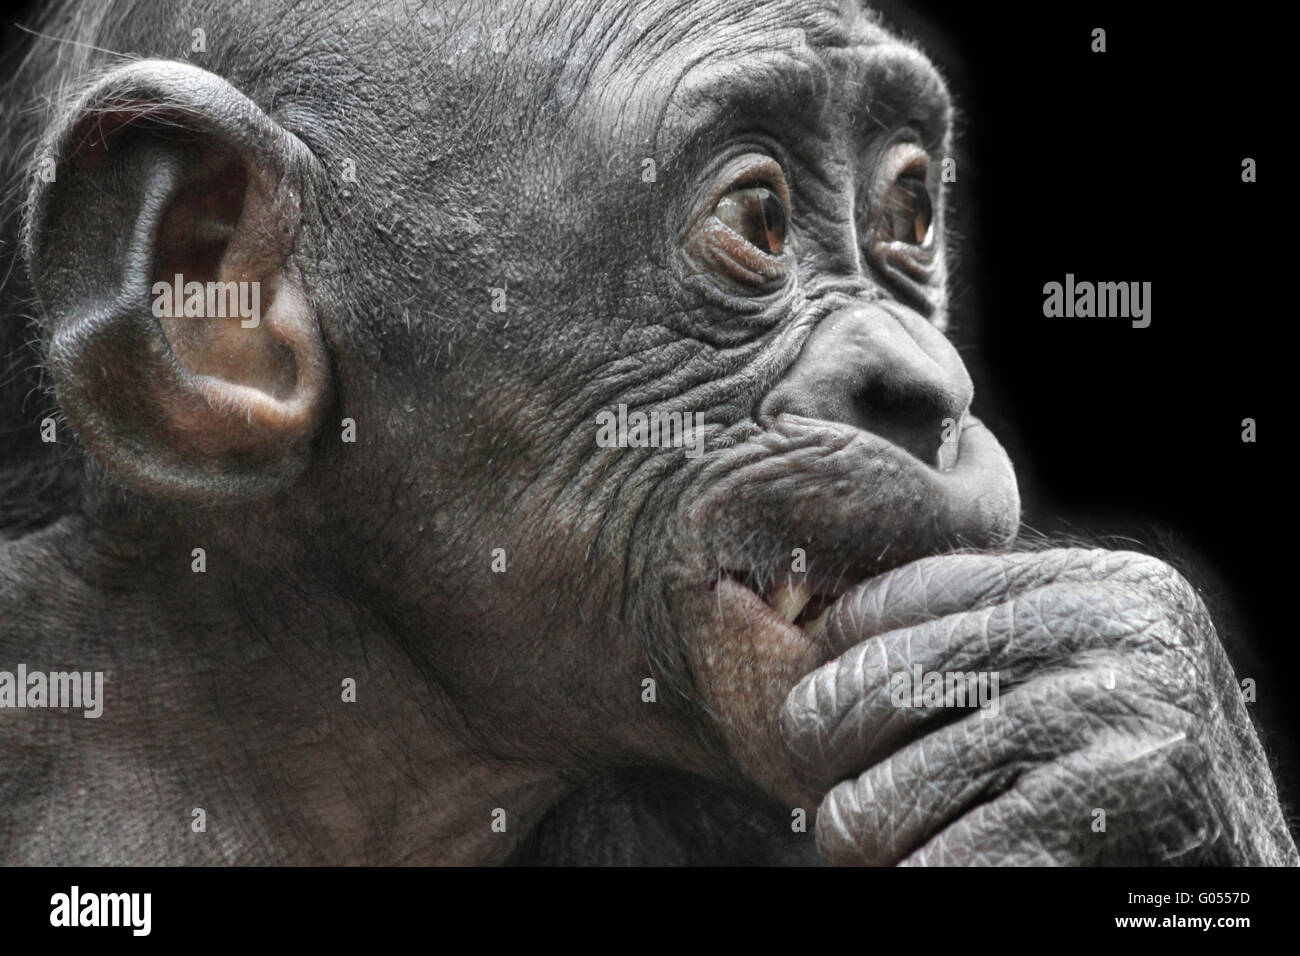 Pygmy Schimpanse Pangi Stockfoto